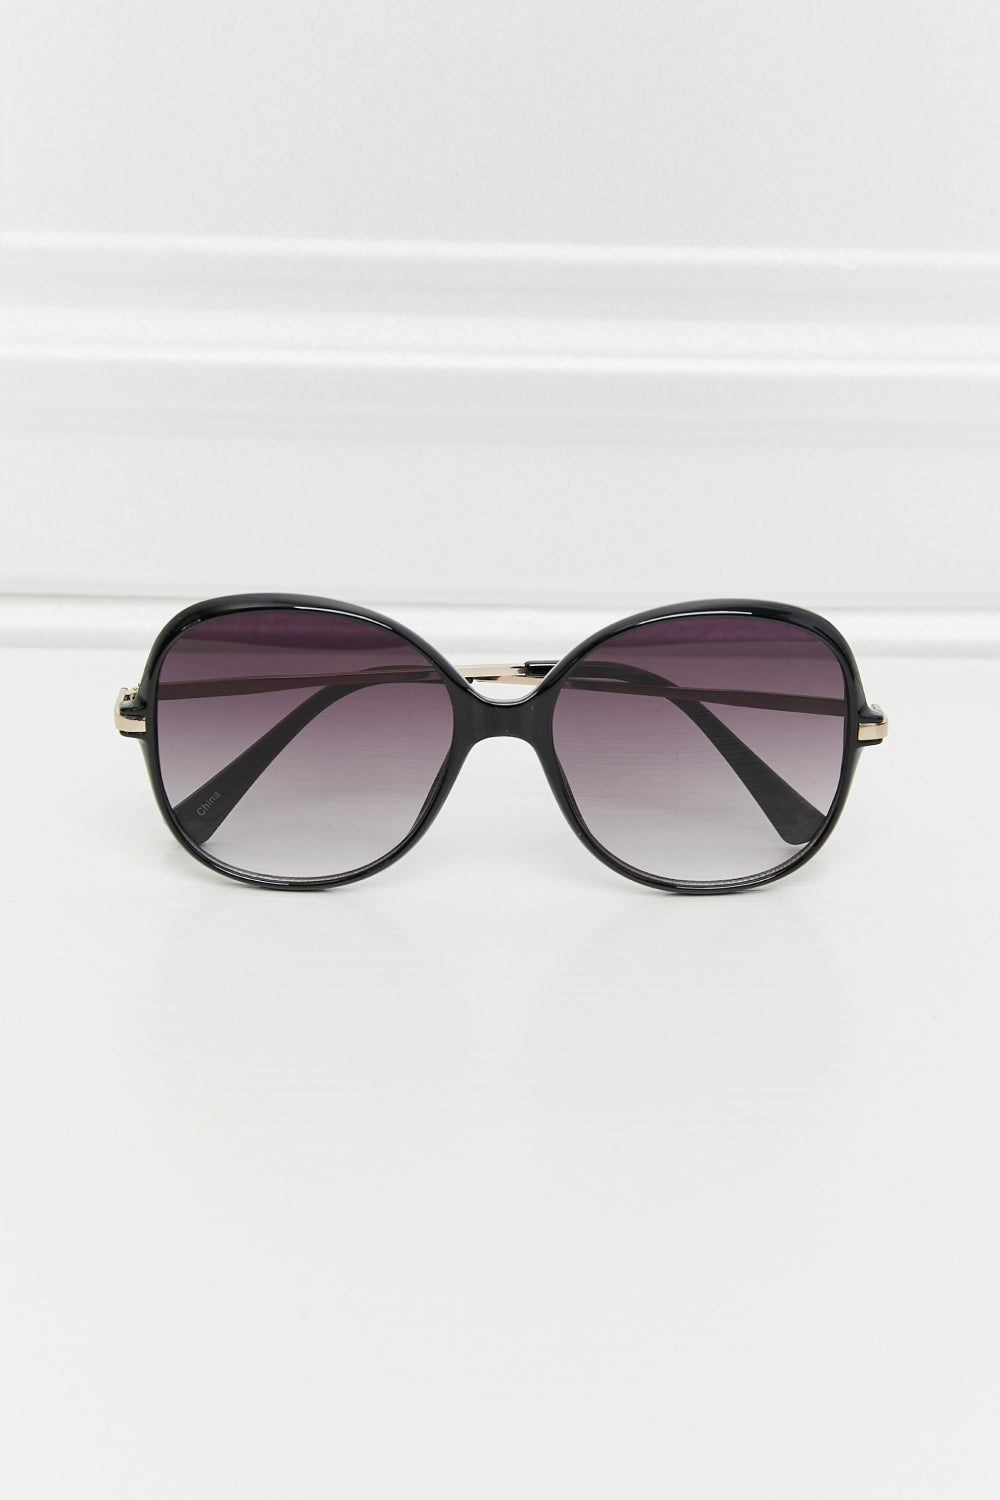 Metal-Plastic Hybrid Full Rim Sunglasses - 2 colors - Sunglasses at TFC&H Co.